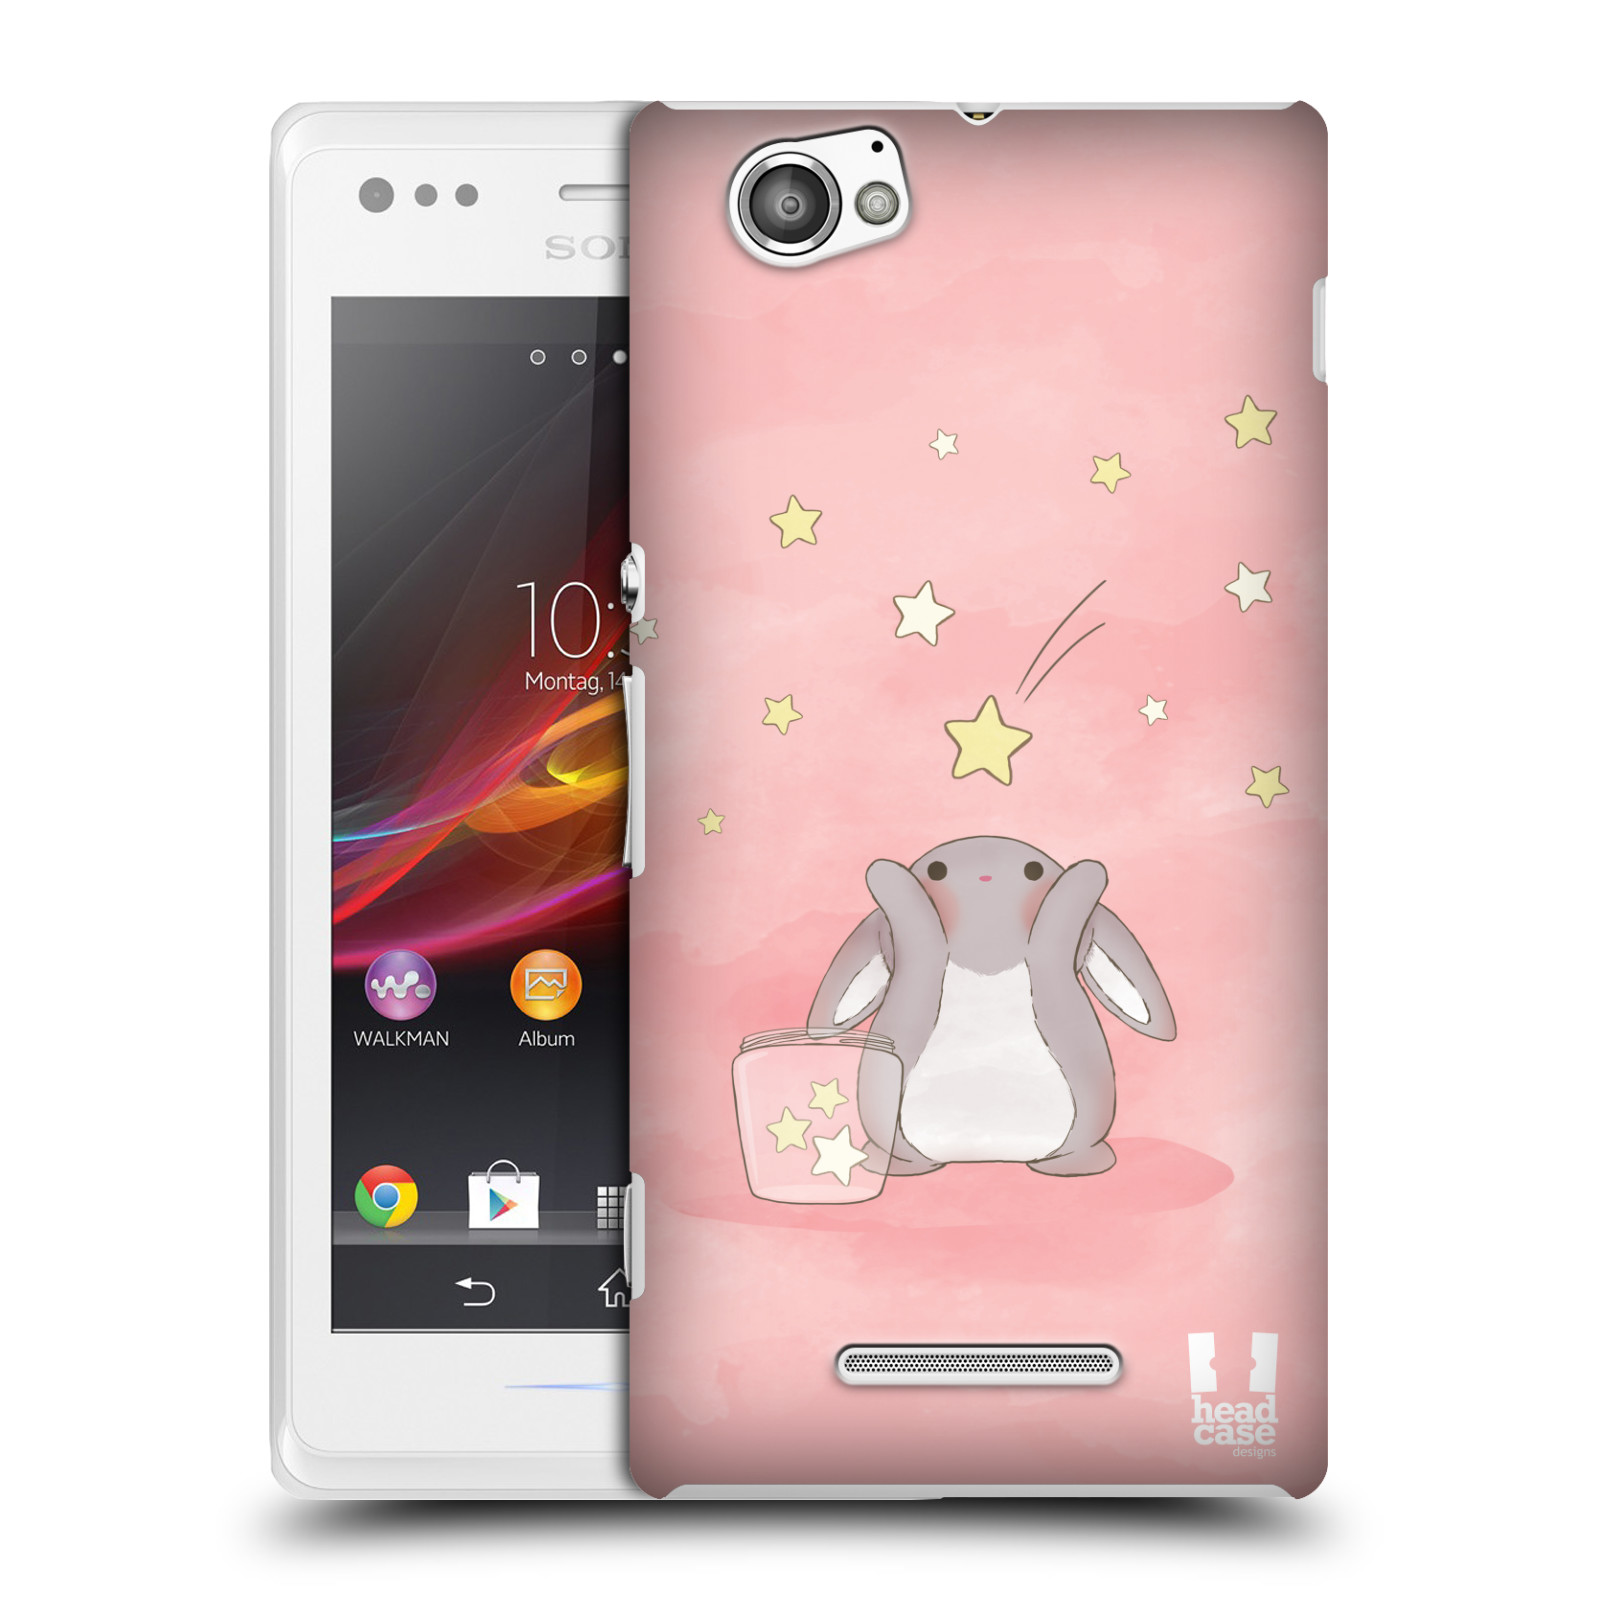 HEAD CASE plastový obal na mobil Sony Xperia M vzor králíček a hvězdy růžová